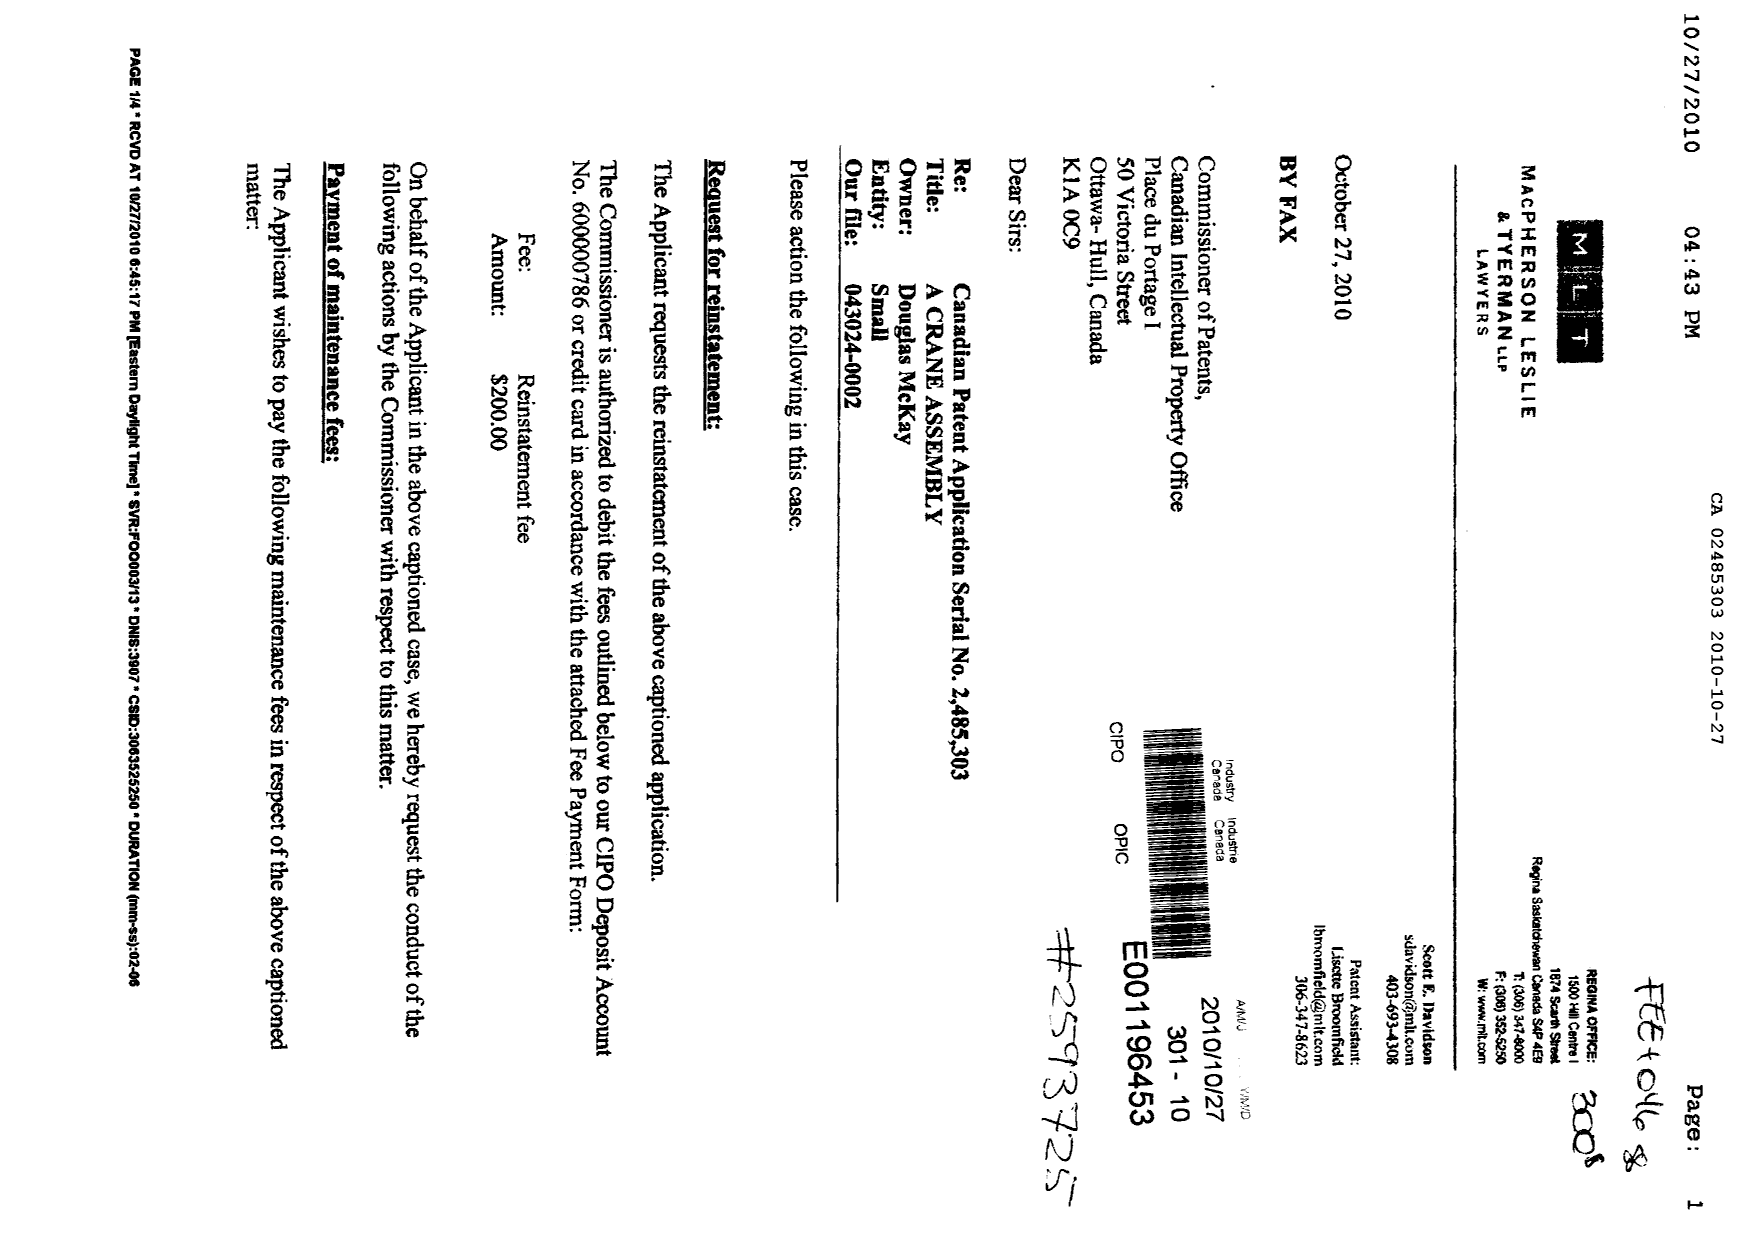 Canadian Patent Document 2485303. Correspondence 20101027. Image 1 of 2